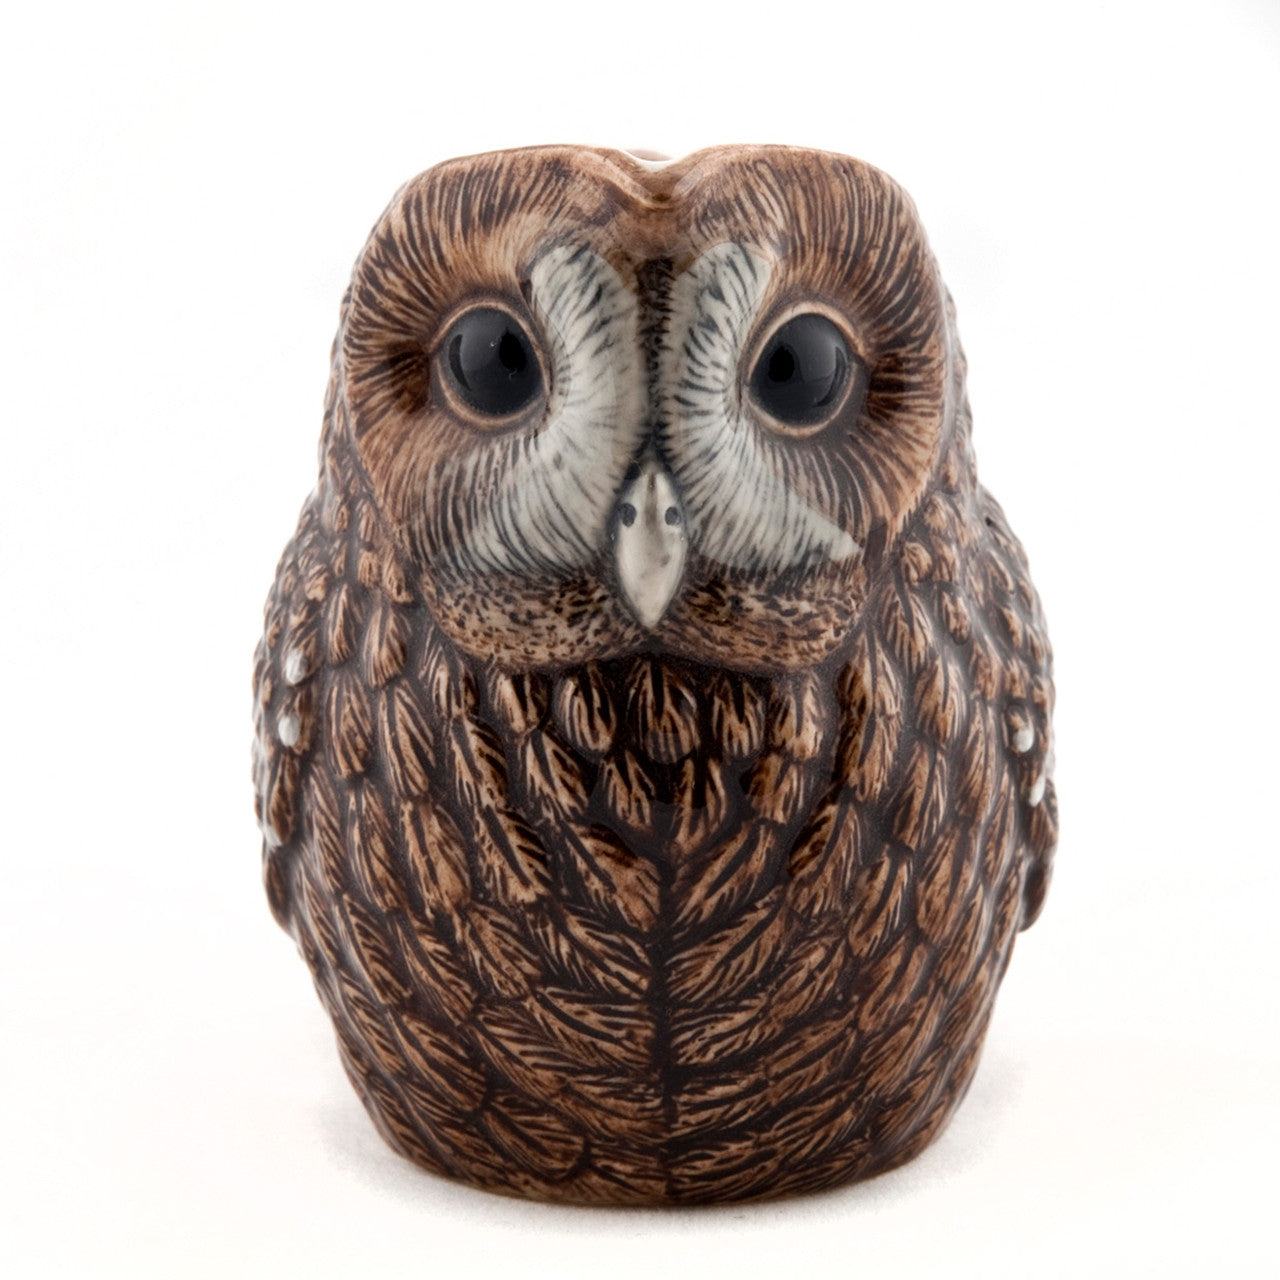 Tawny Owl Jug 3.5"